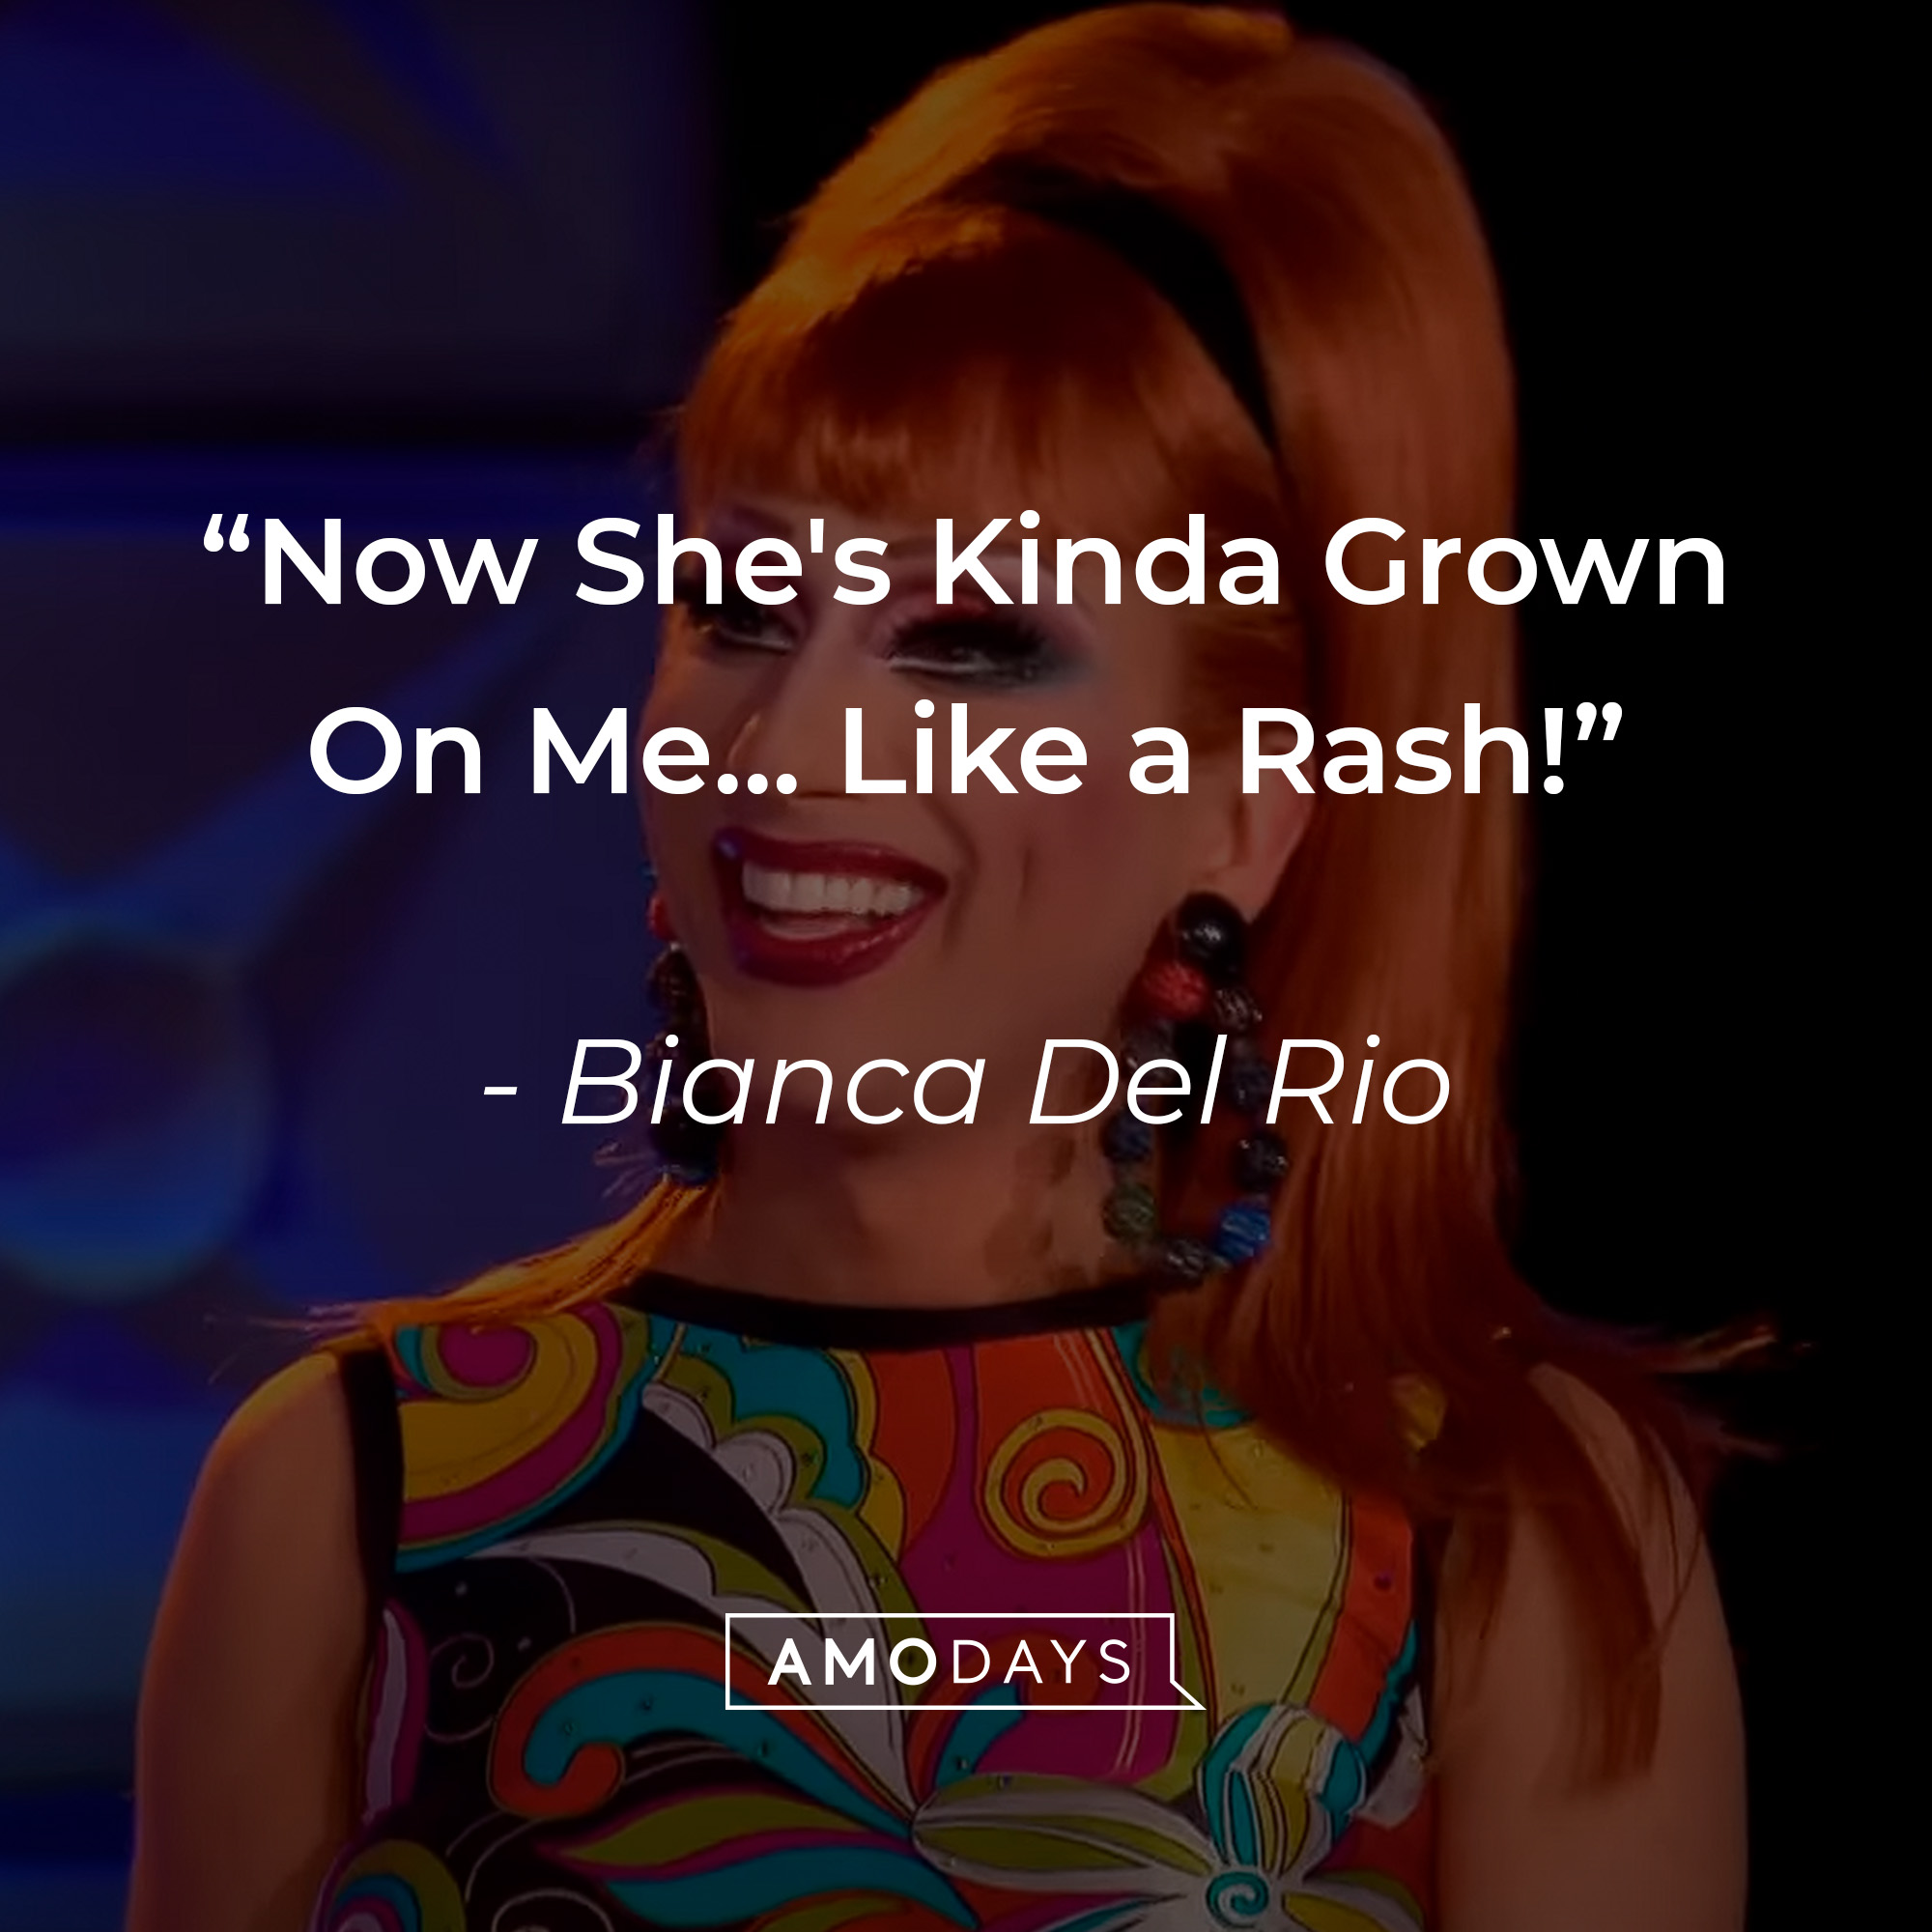 Bianca Del Rio's quote: "Now She's Kinda Grown On Me... Like a Rash!" | Source: youtube.com/rupaulsdragrace